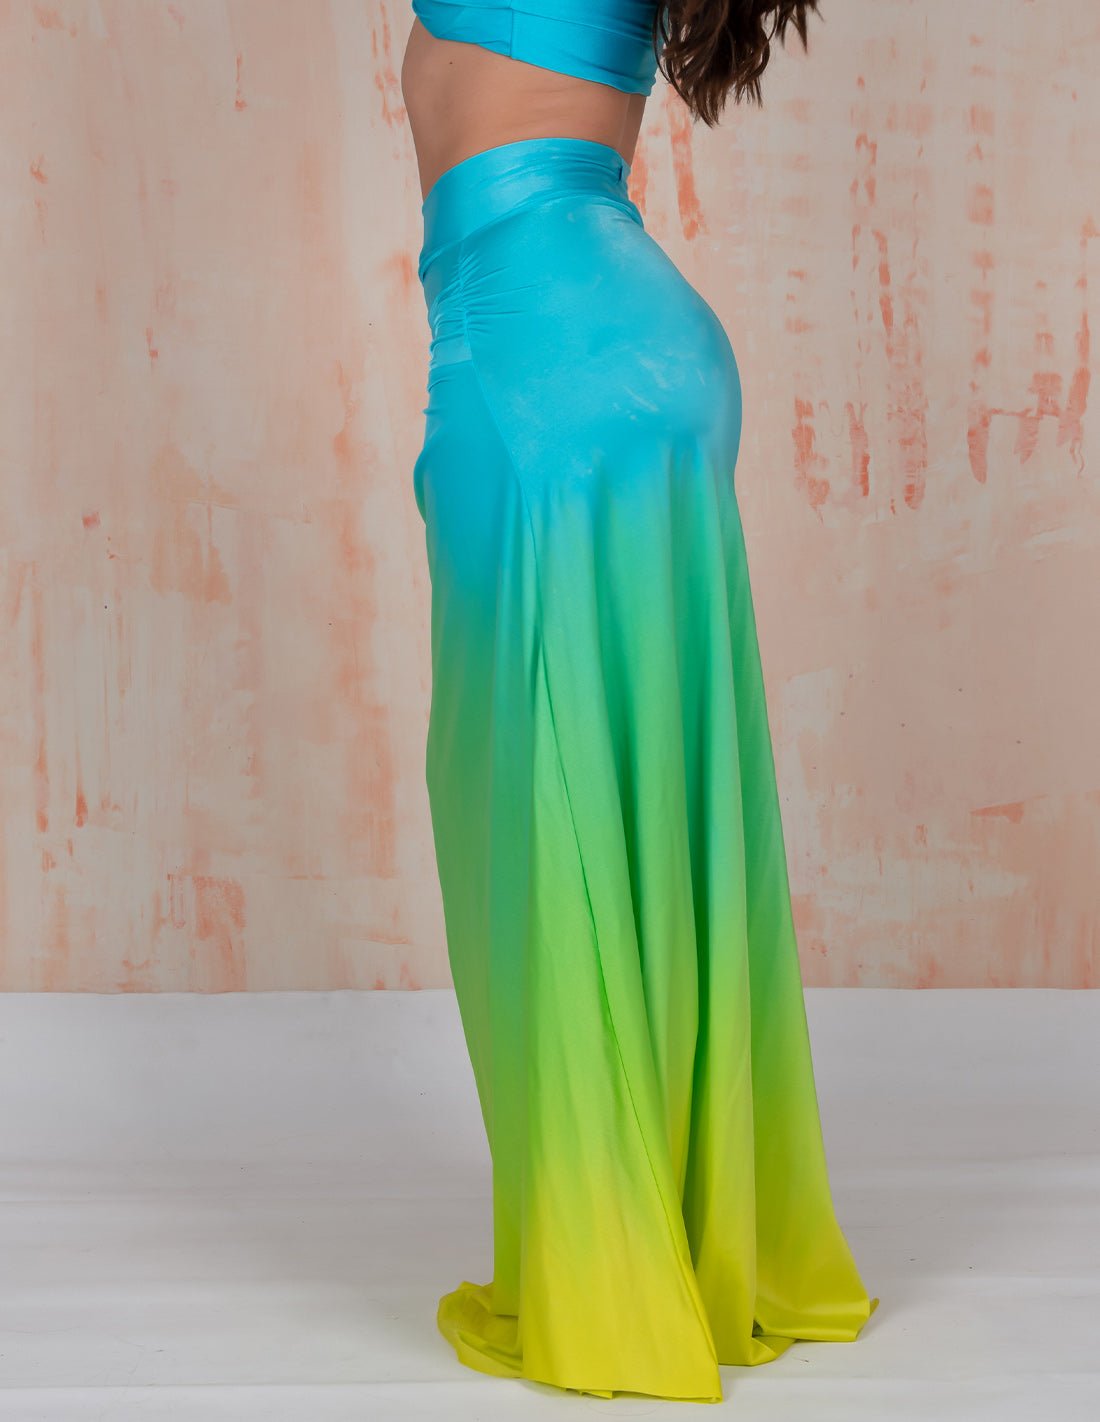 Falda Regalia Sky Blue + Green + Yellow - Entreaguas Wearable Art